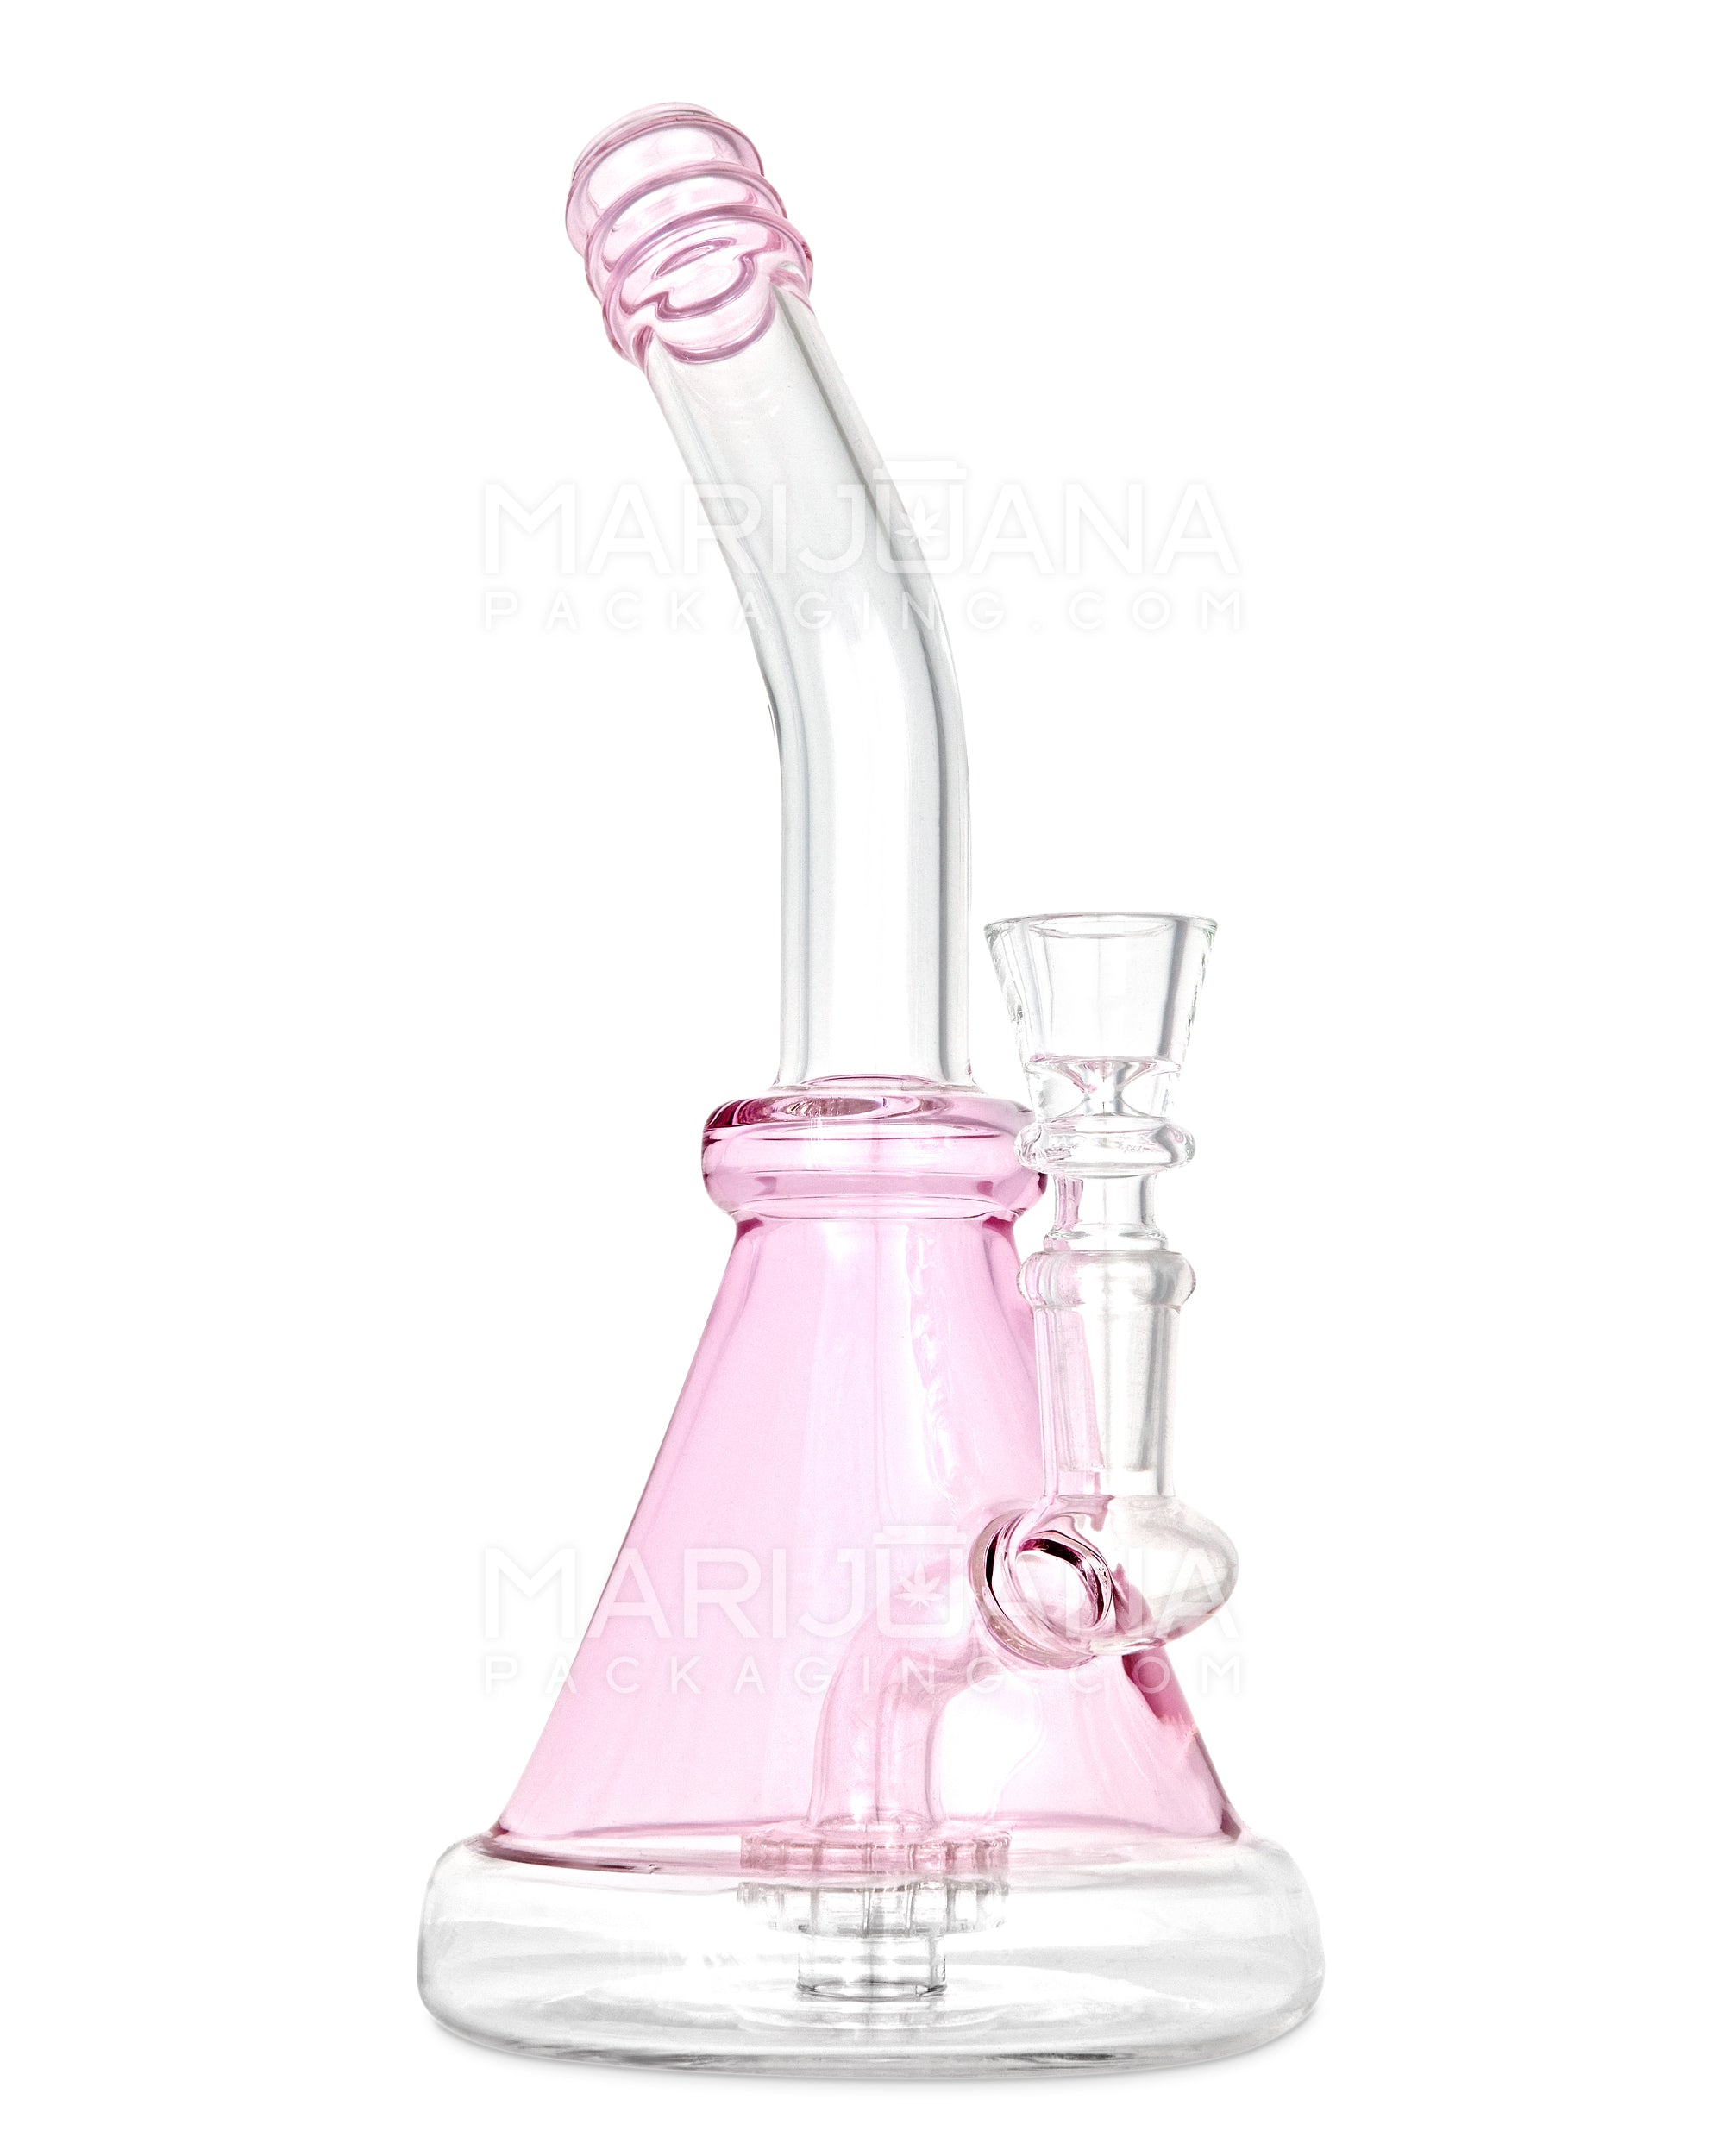 Bent Neck Showerhead Percolator Glass Beaker Water Pipe | 10in Tall - 14mm Bowl - Pink - 6